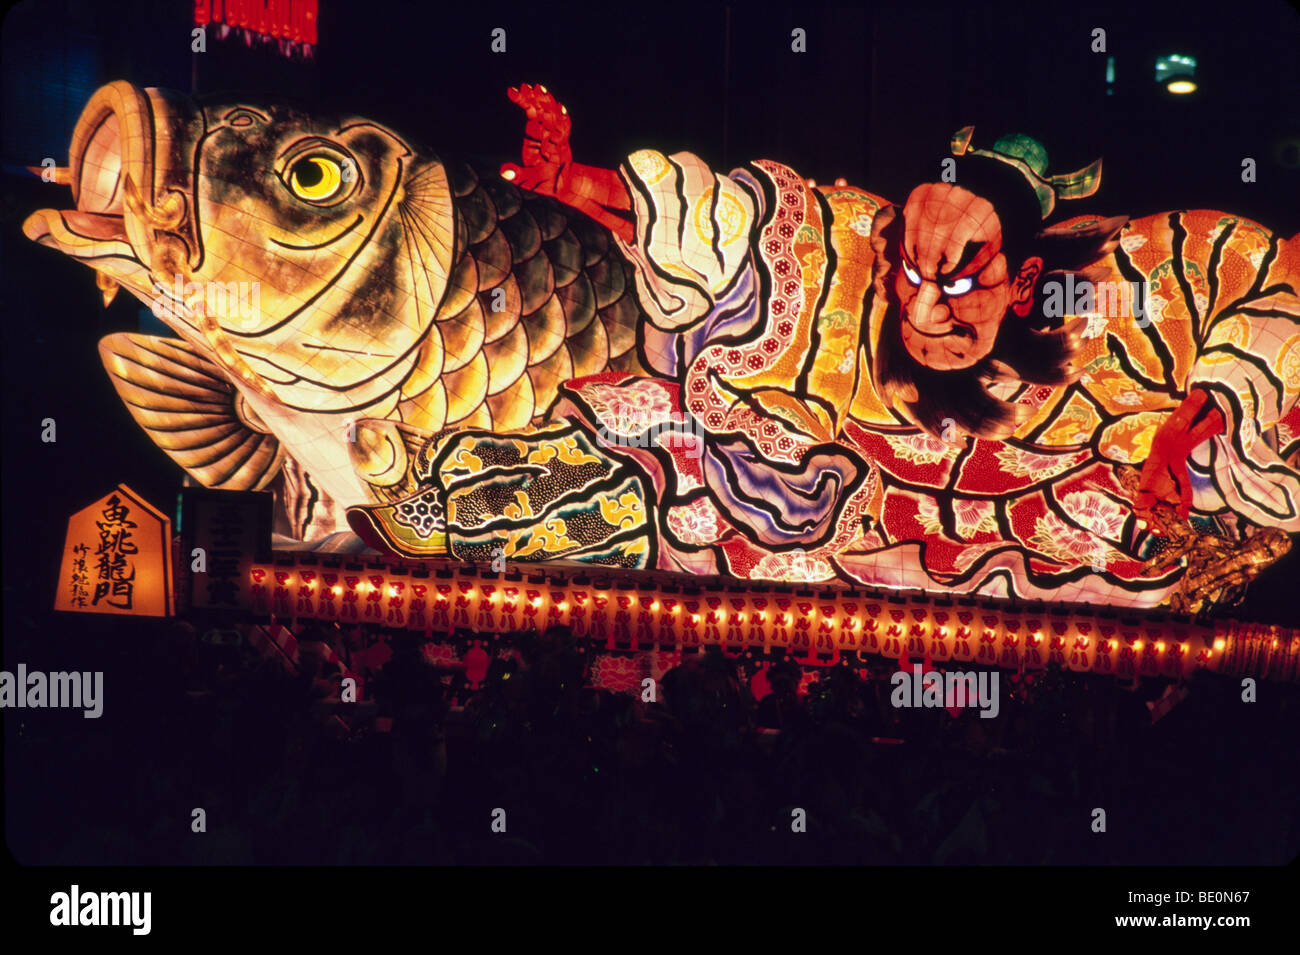 A lighted festival float is paraded through the city during the annual Aomori Nebuta Matsuri Aomori Japan Stock Photo